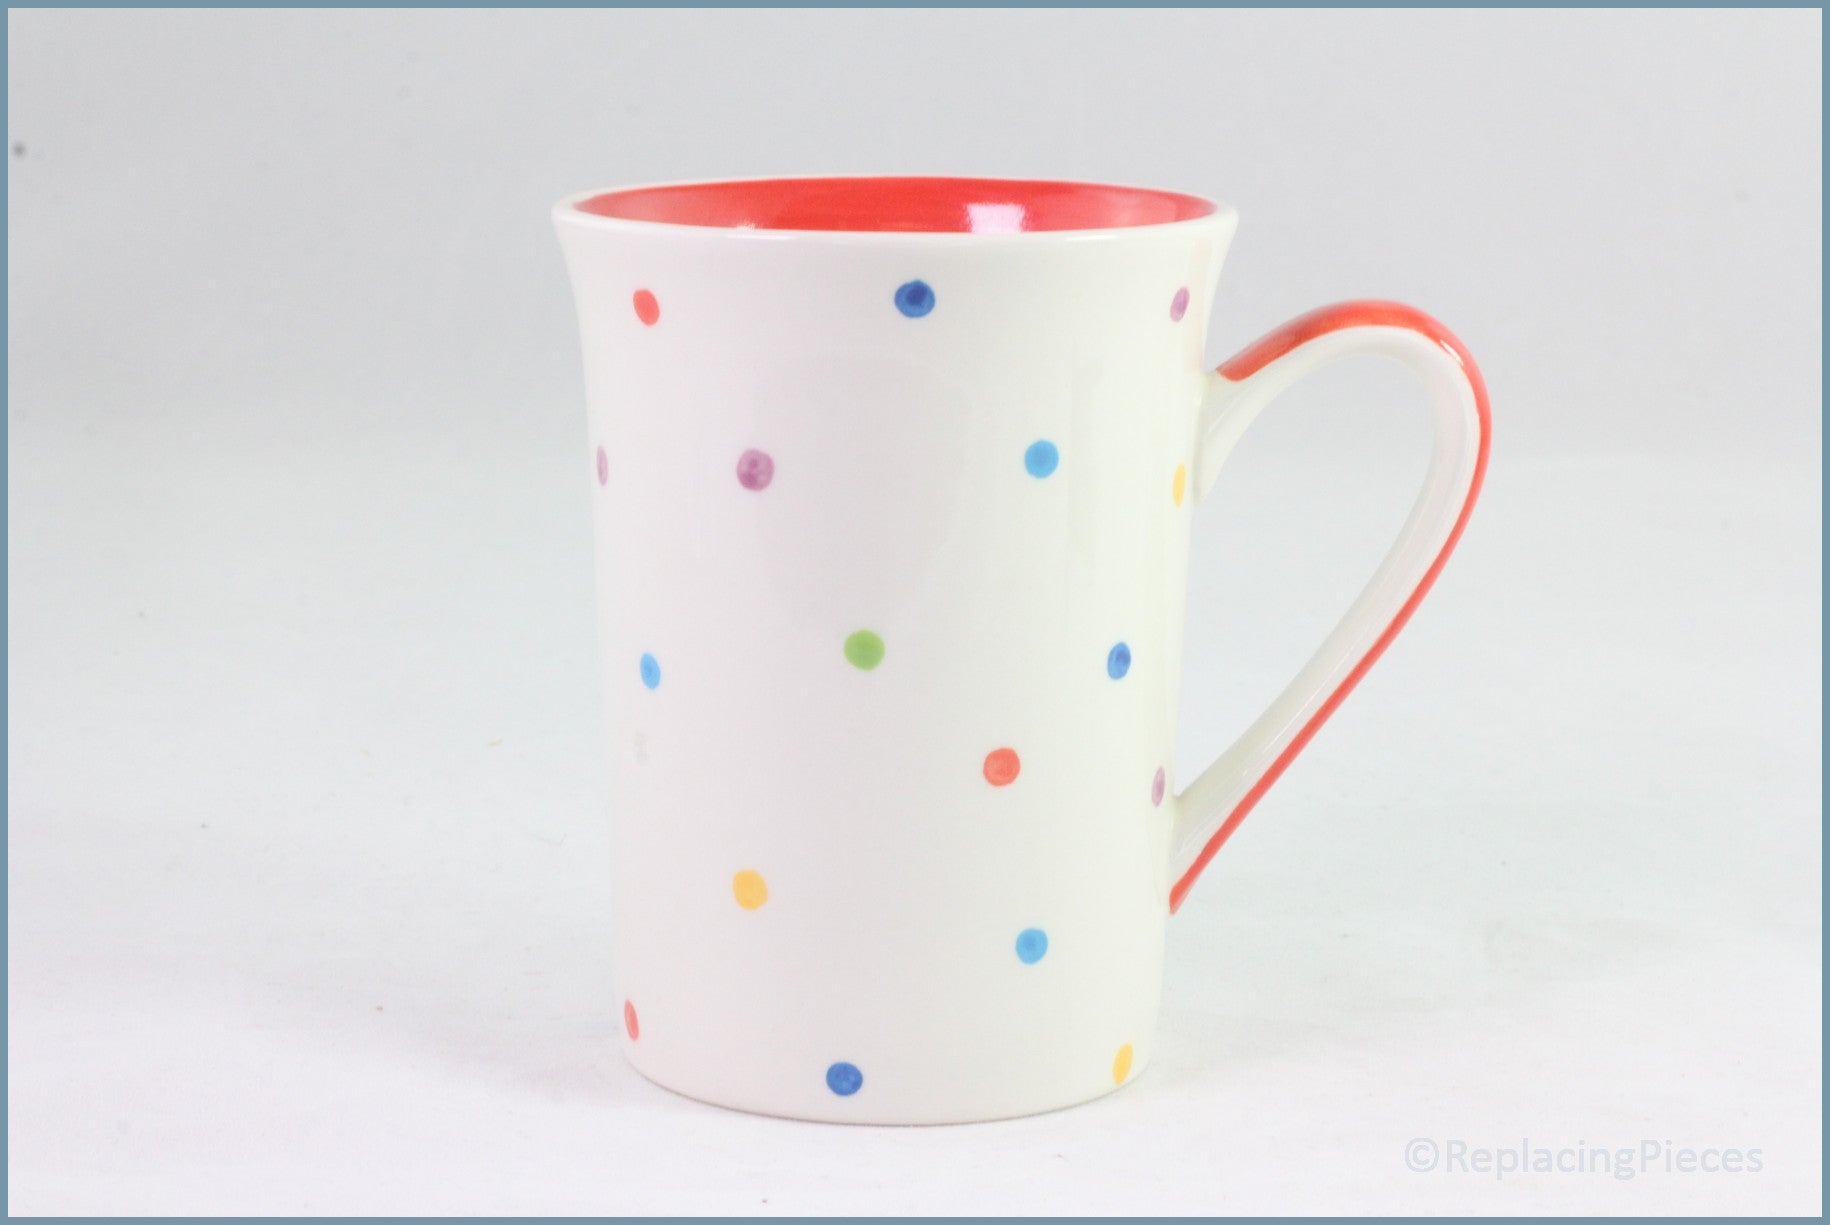 RPW162 - Whittards - Mug (Multi-Colour Spot - Red Interior)